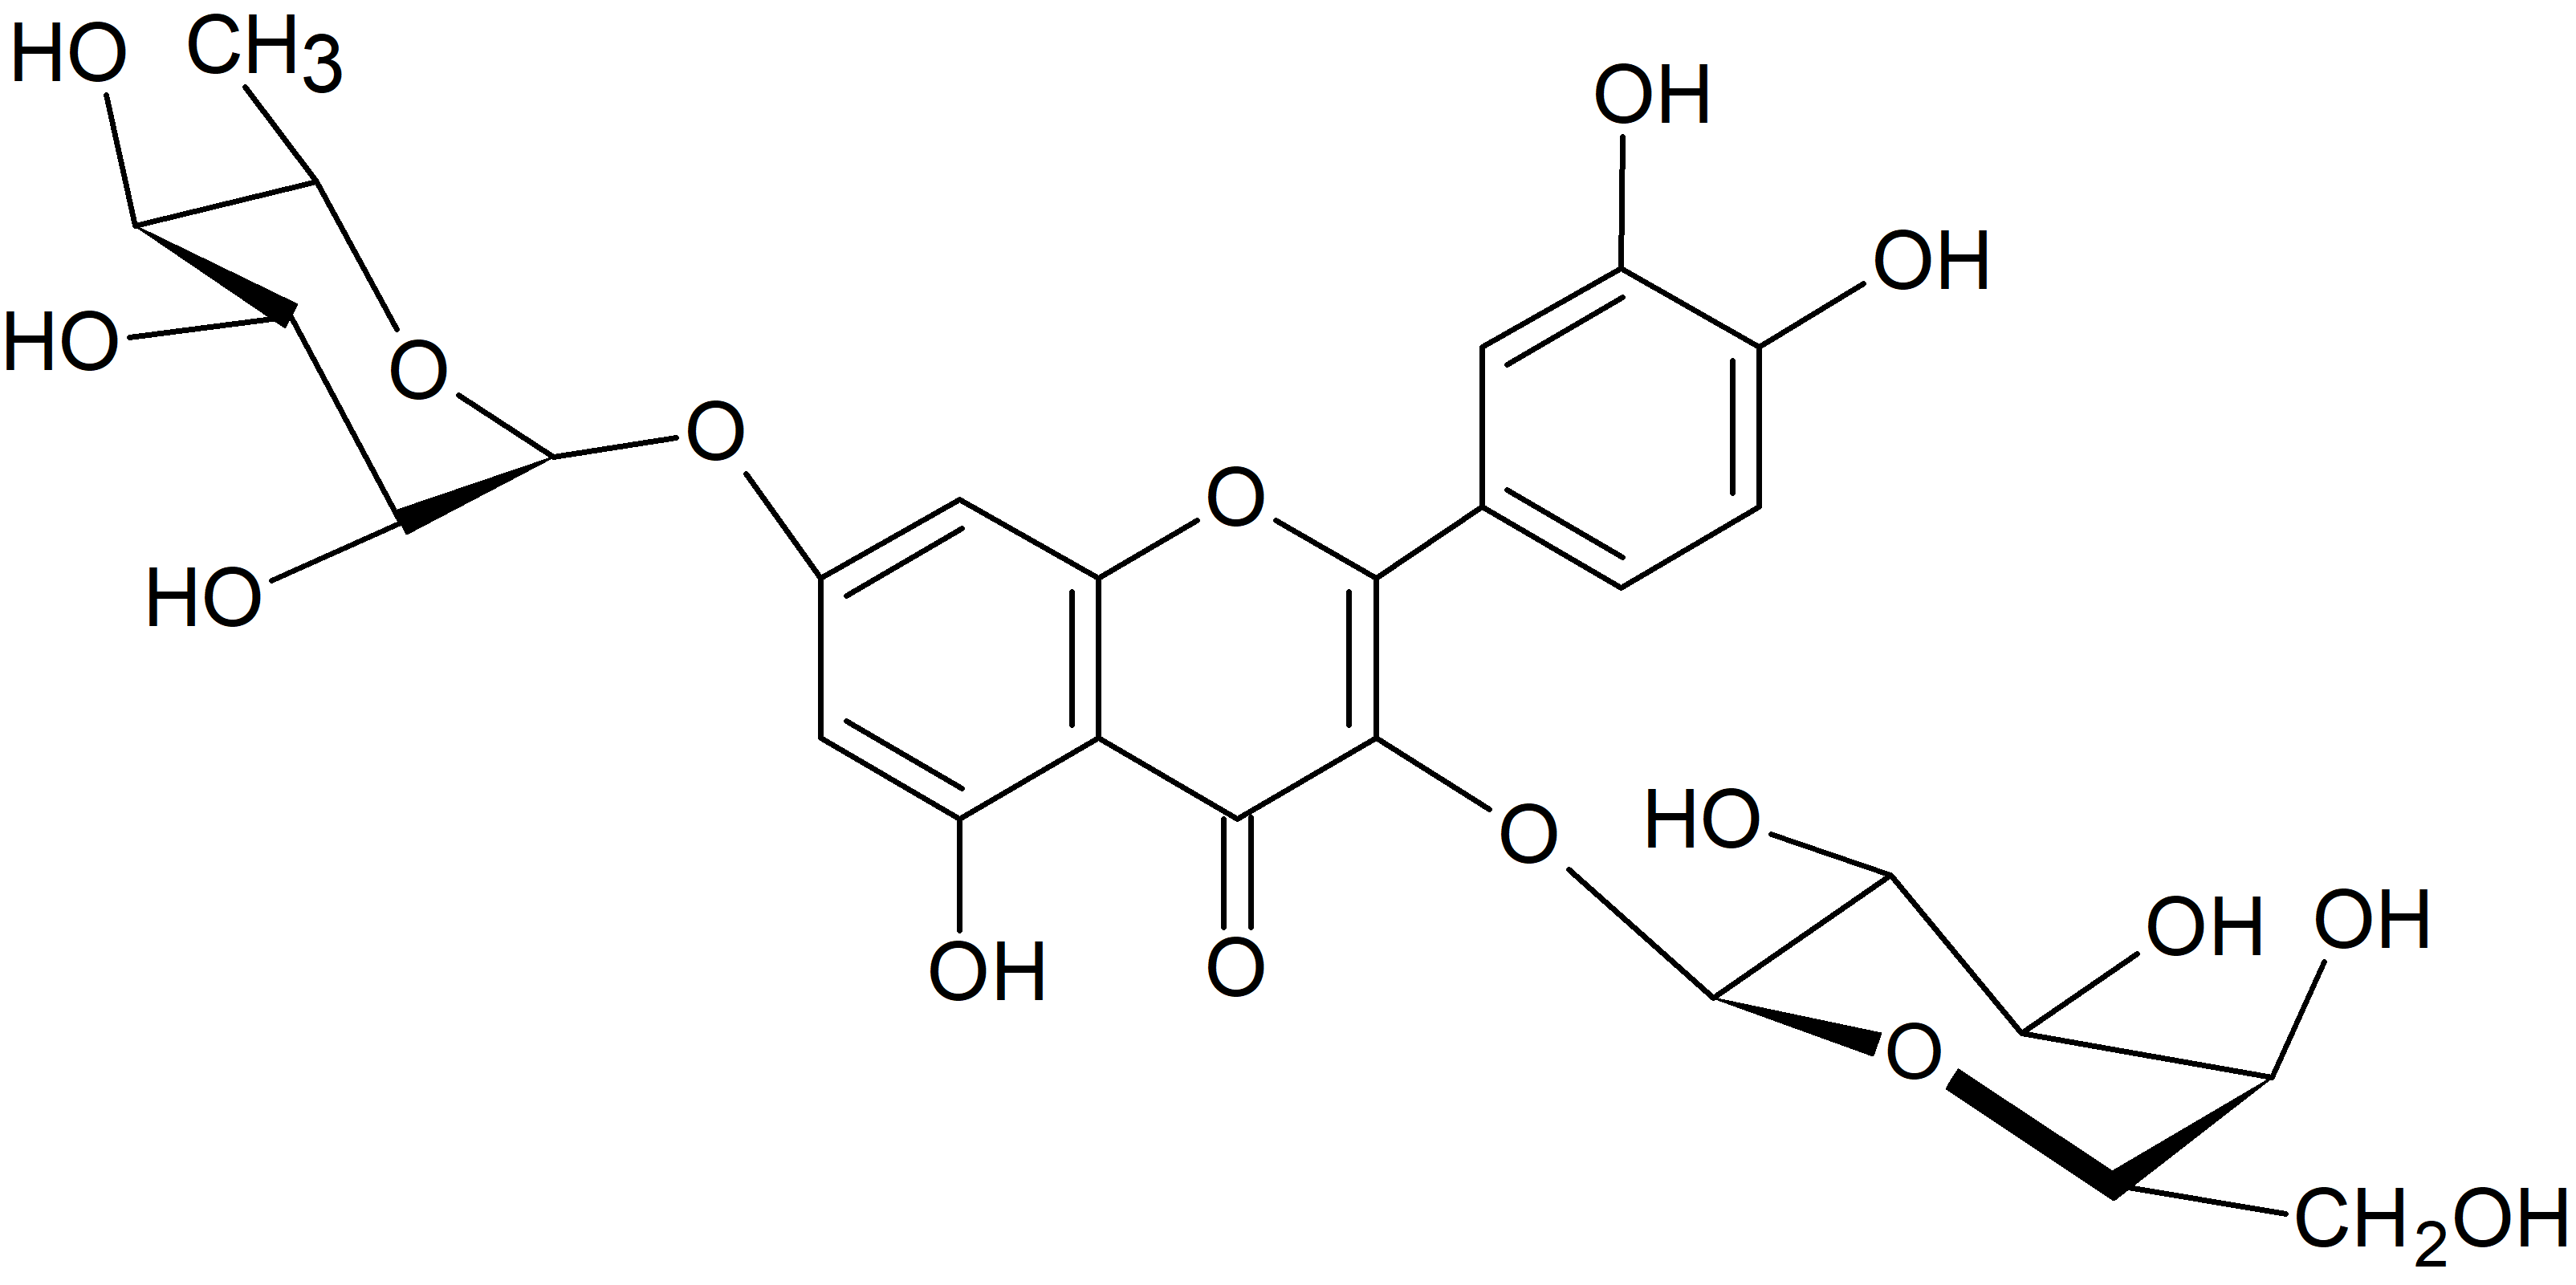 Quercetin 3-O-glalactoside-7-O-rhamnoside